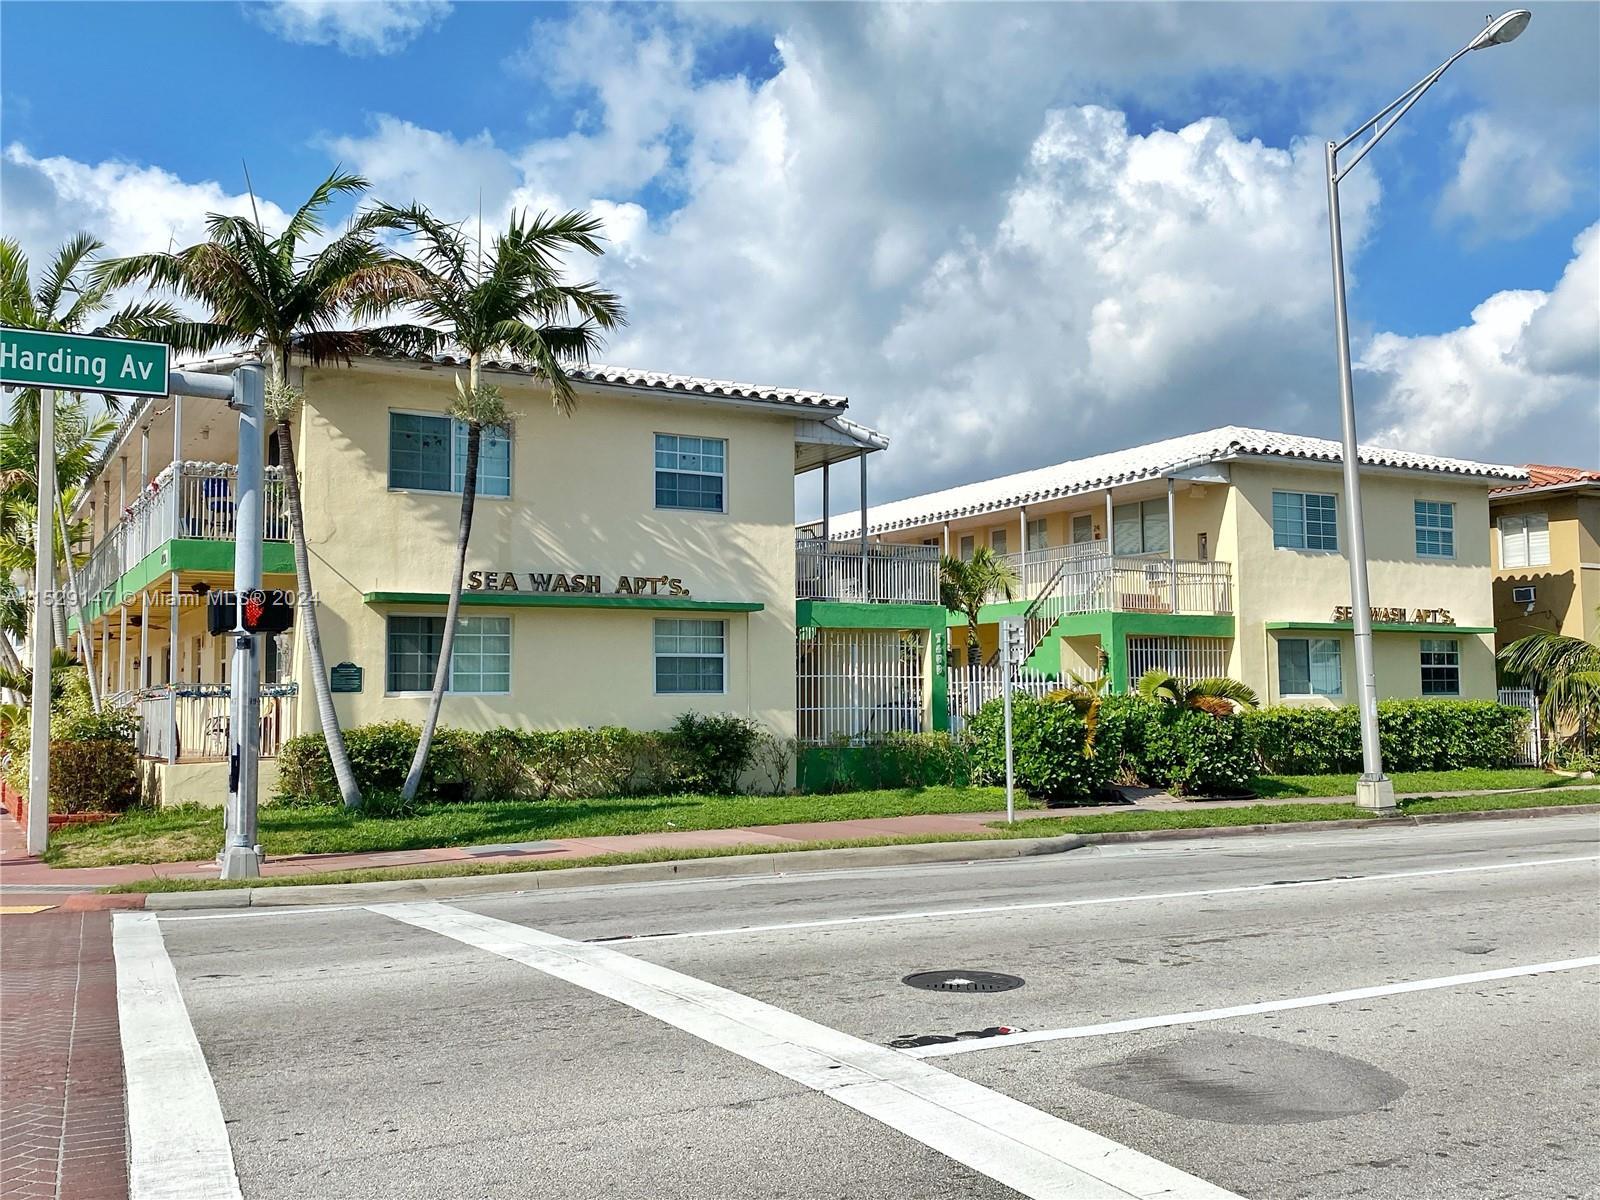 Photo of 7400 Harding Ave #9 in Miami Beach, FL